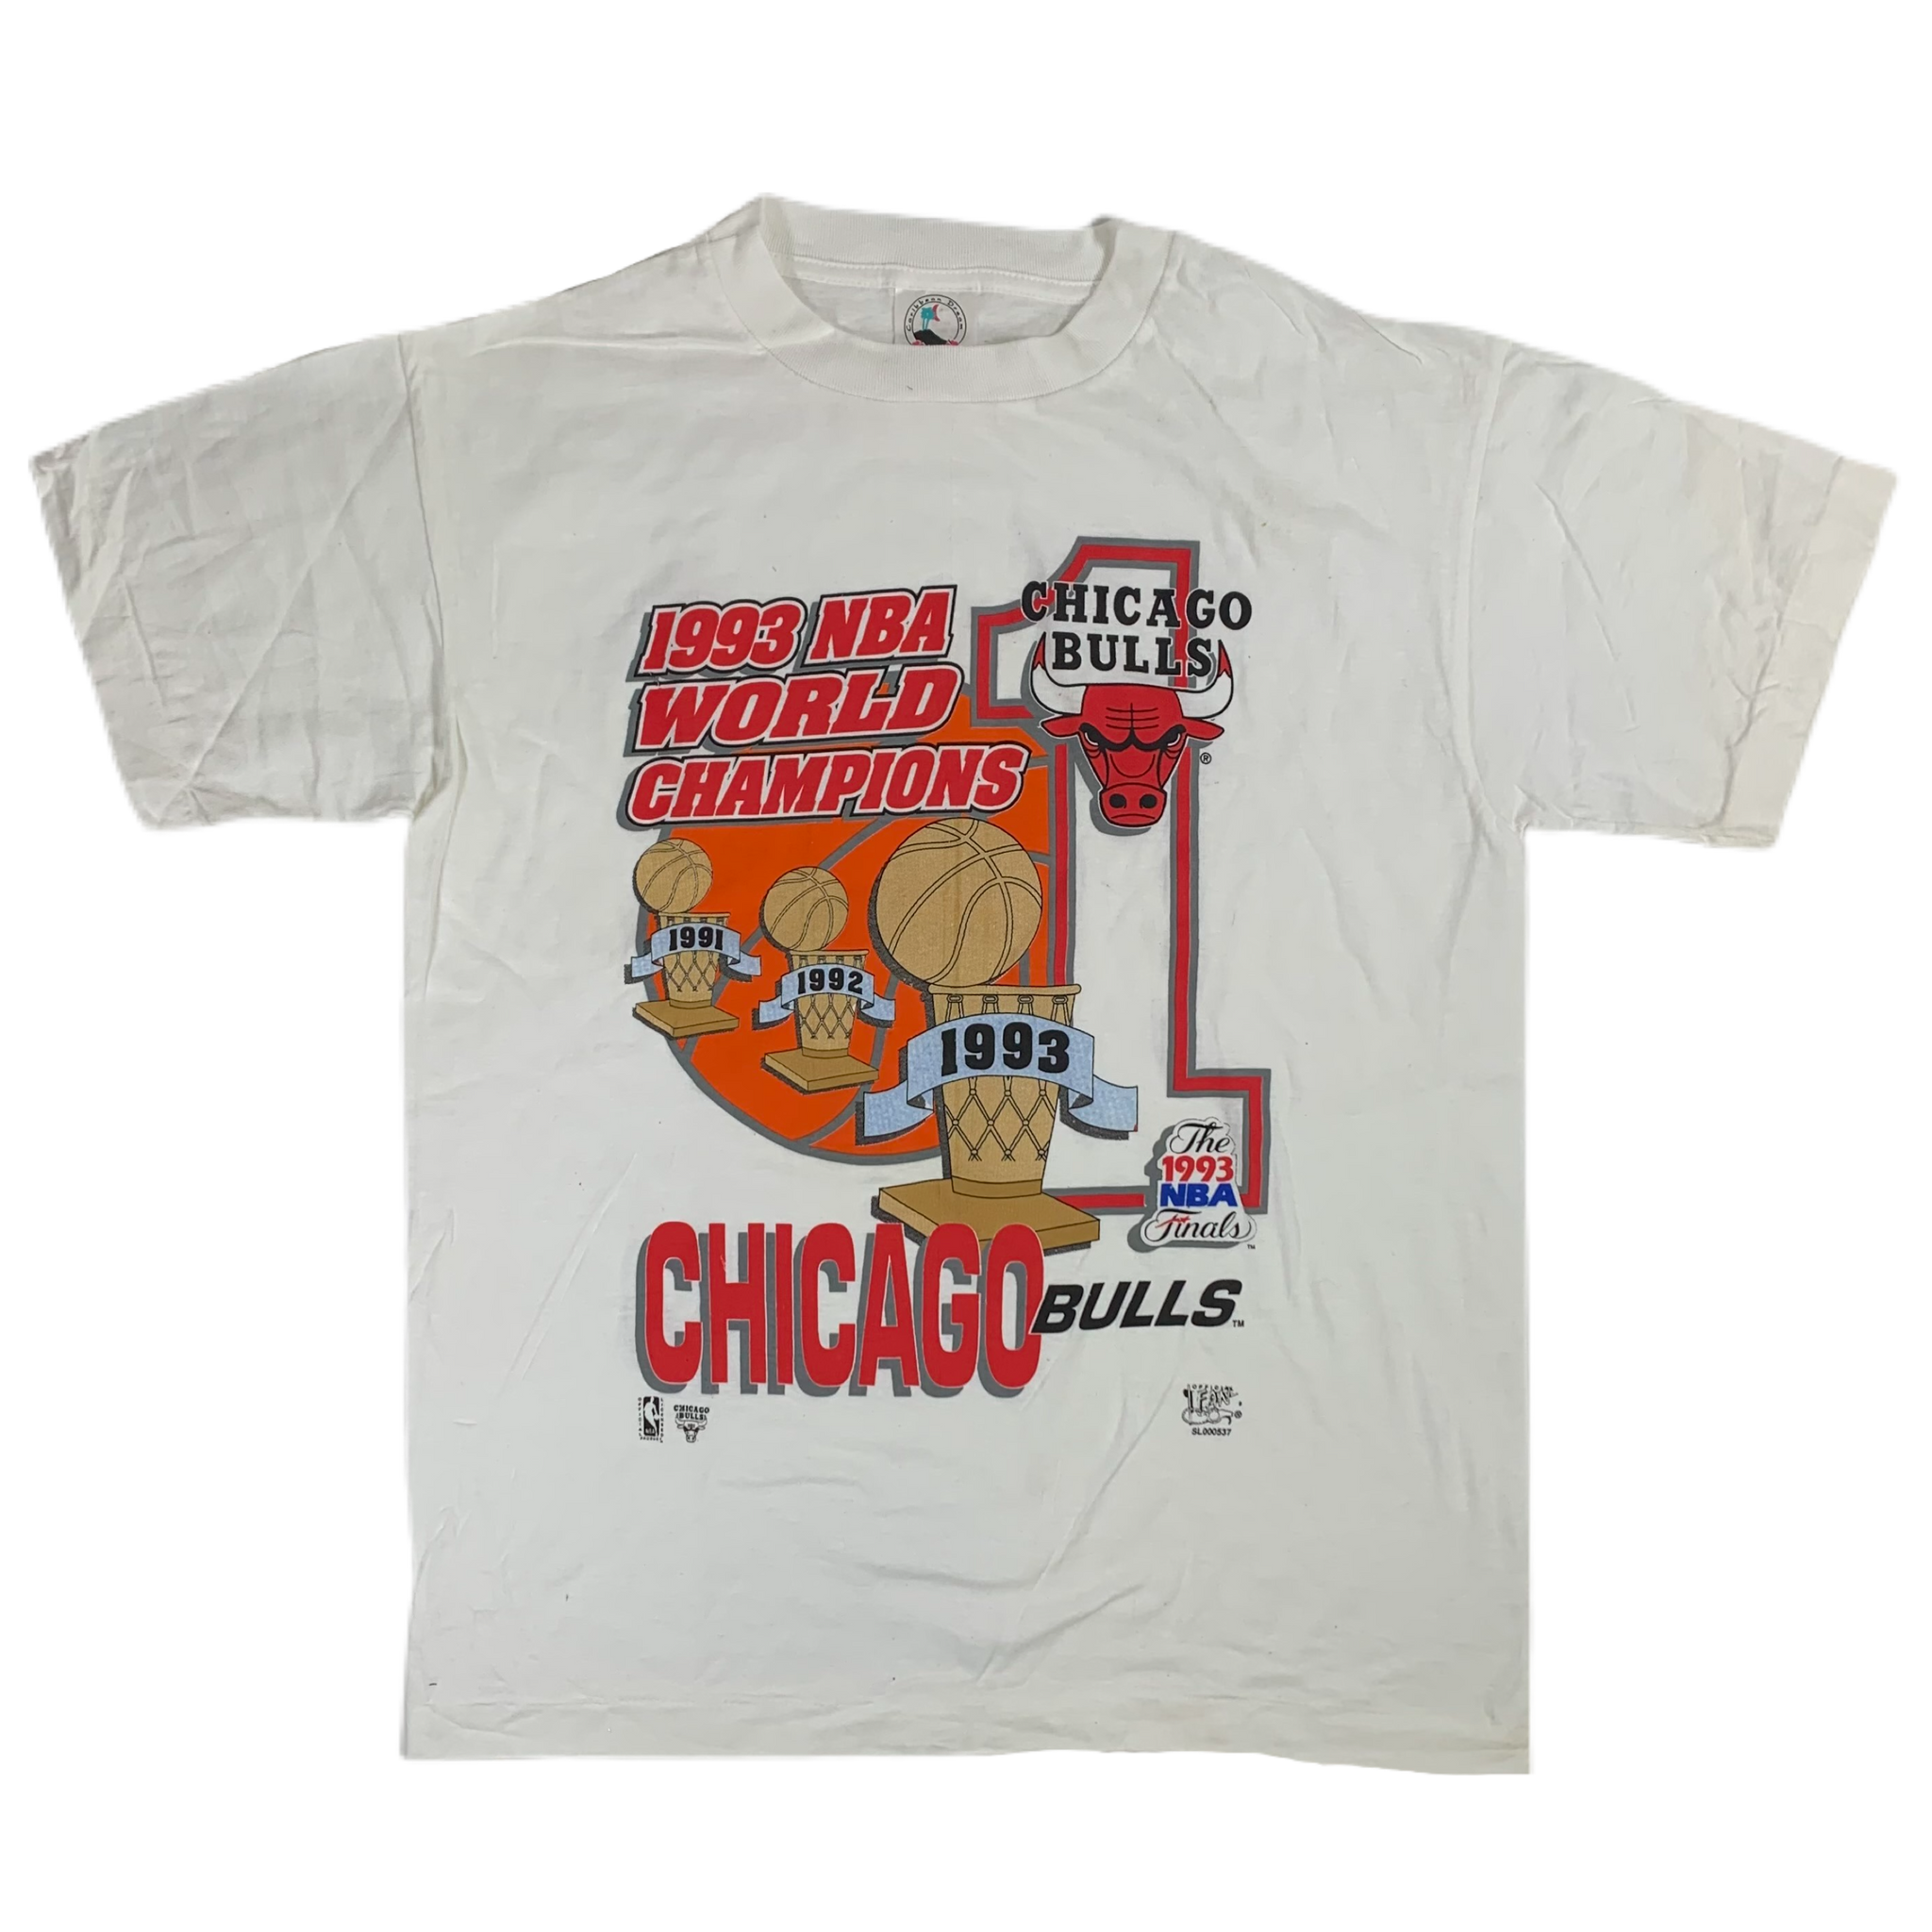 Vintage 1991 NBA Champions Chicago Bulls T shirt